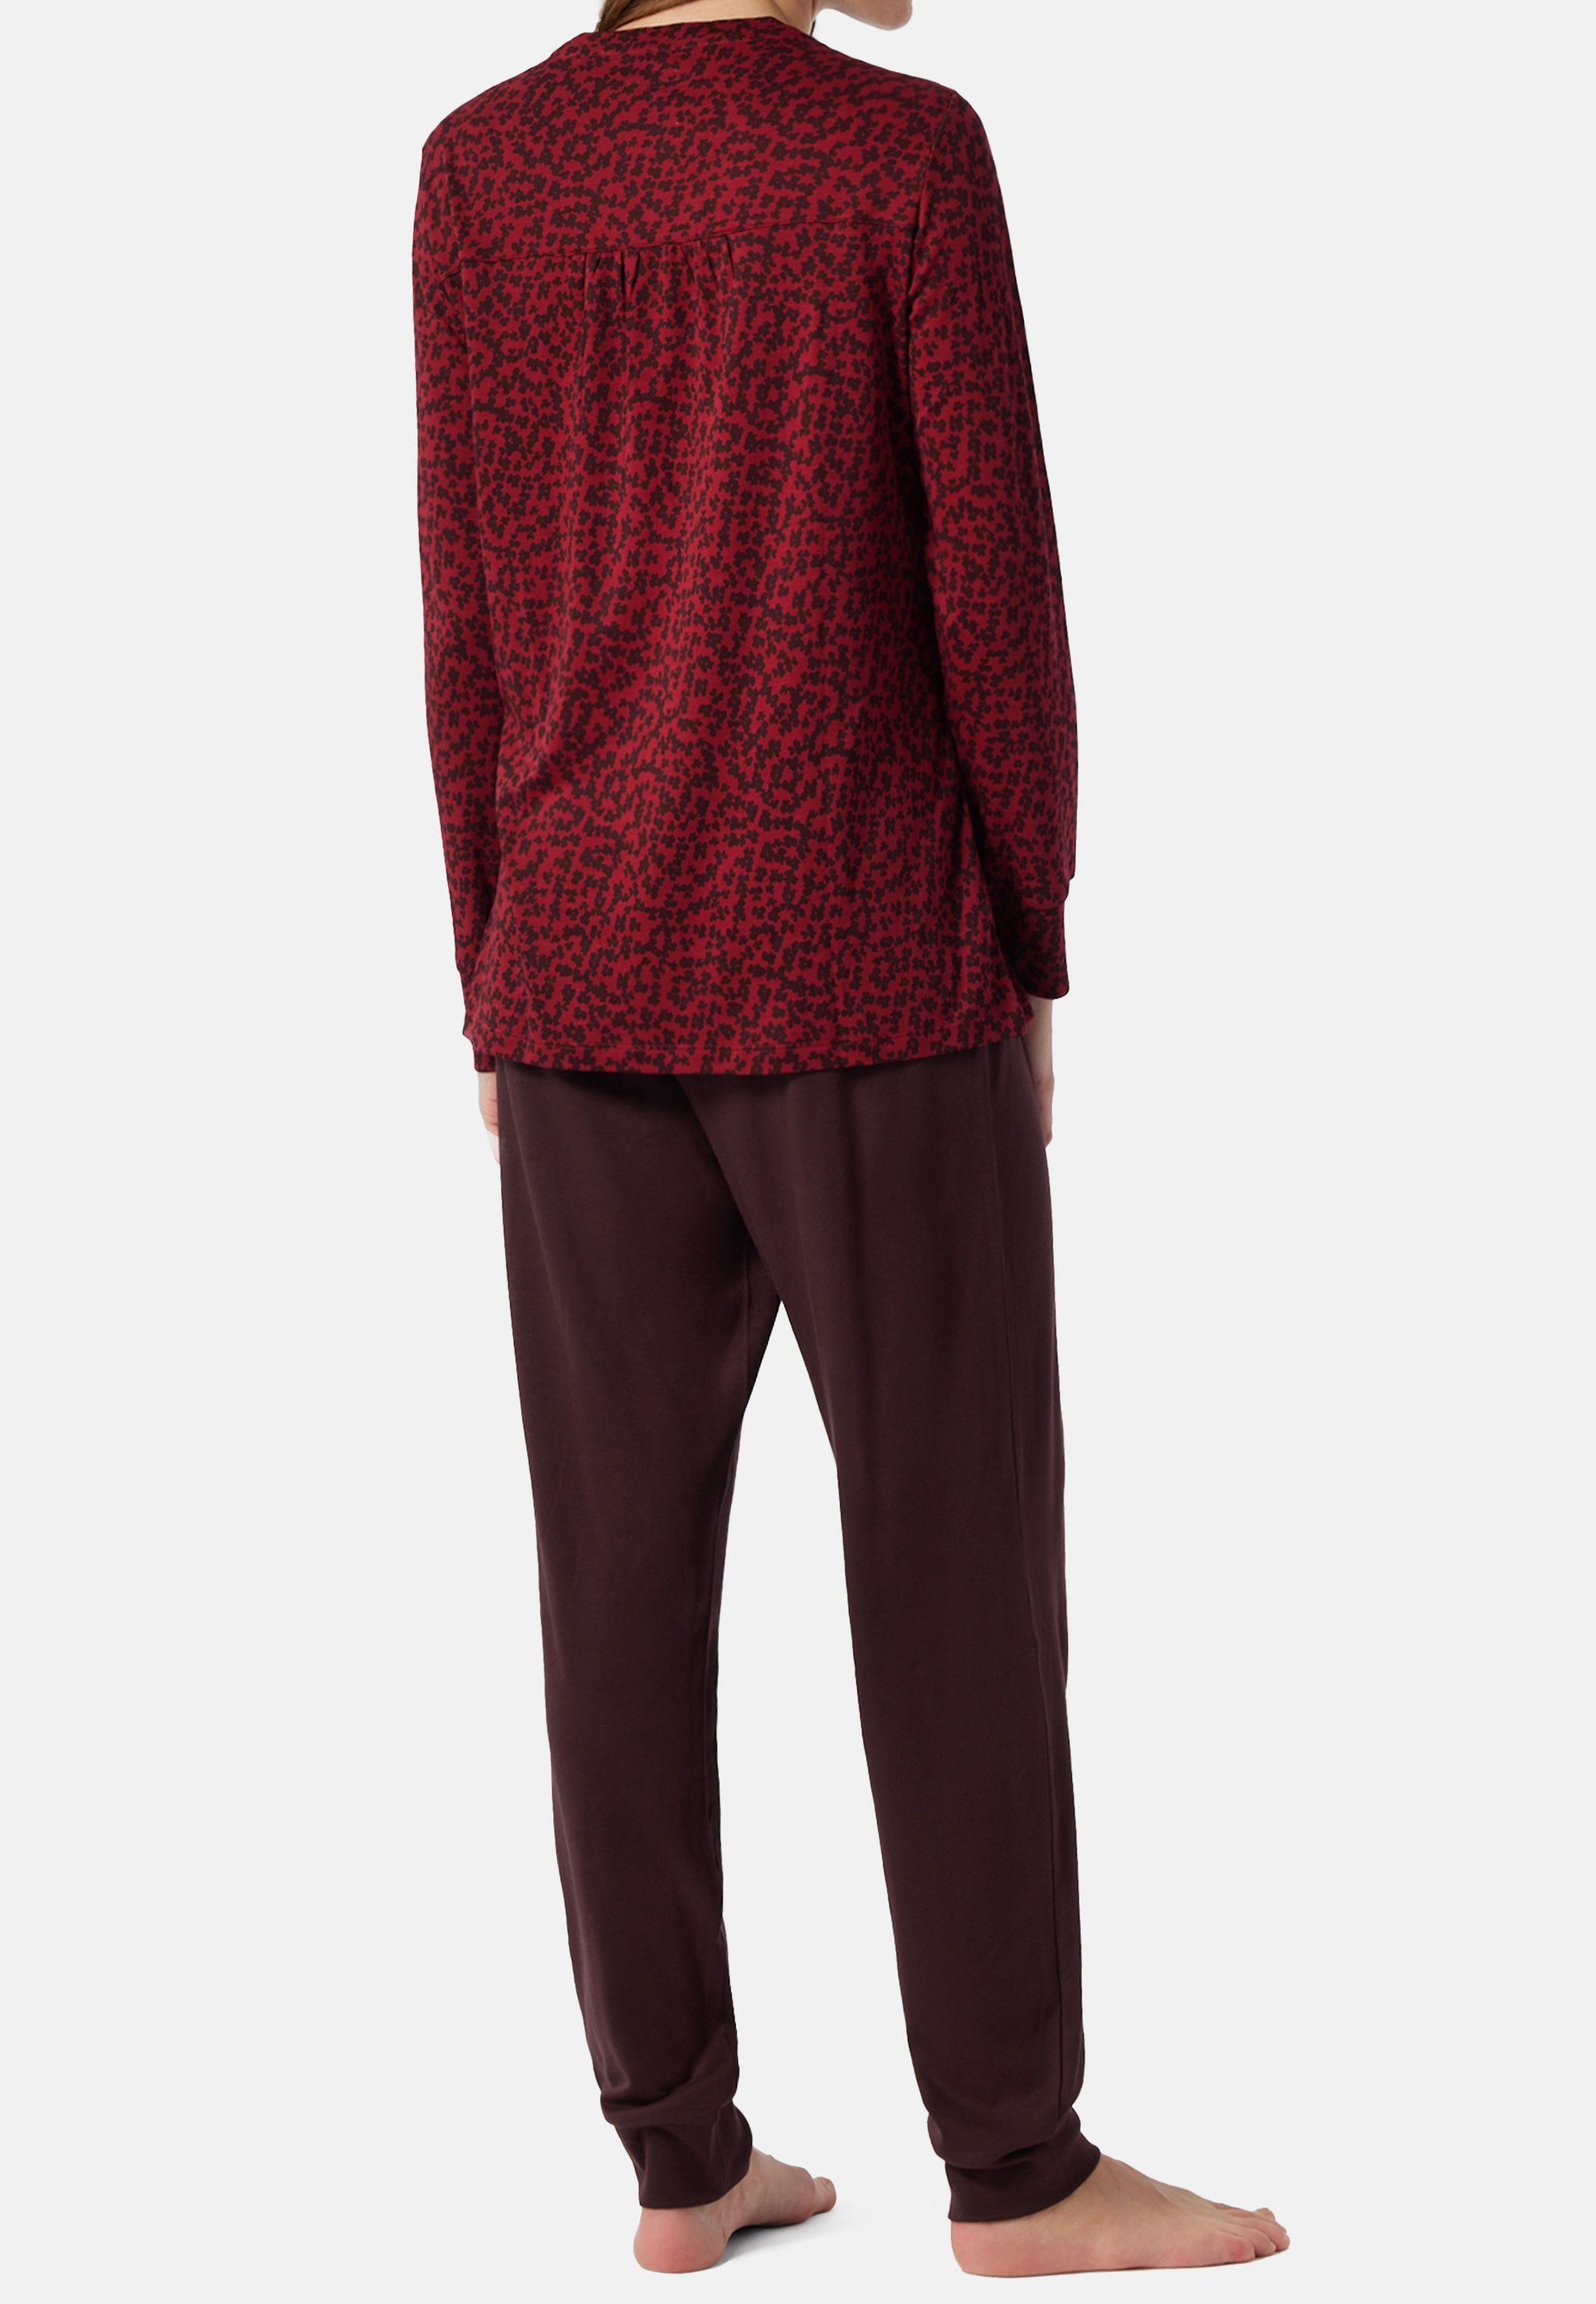 Schiesser Pyjama Langarm Schlafanzug 2 Fit Classic burgund - tlg) (Set, Comfort